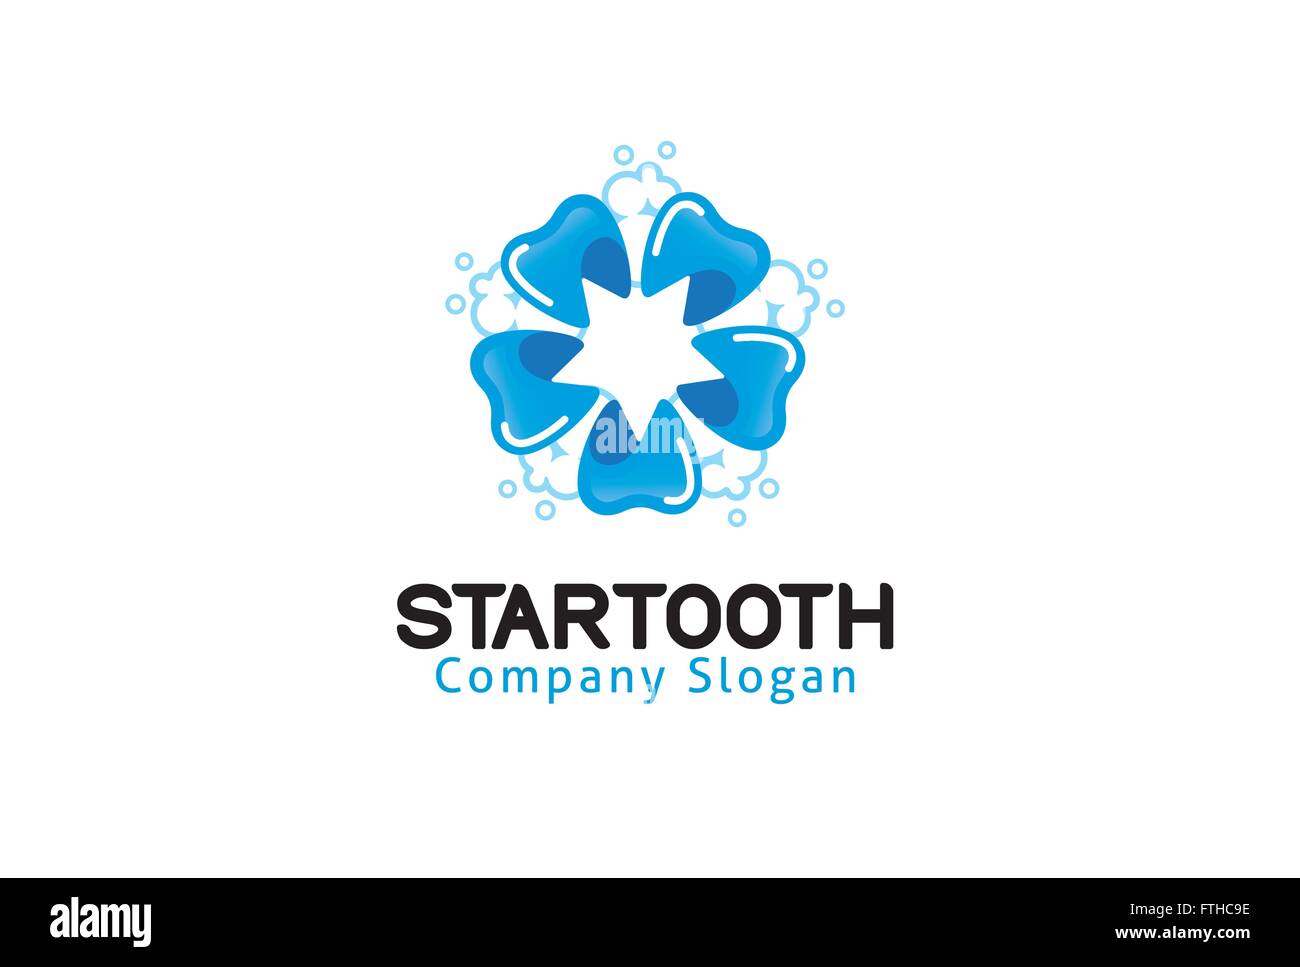 Star Tooth Design Illustration Stock Vector